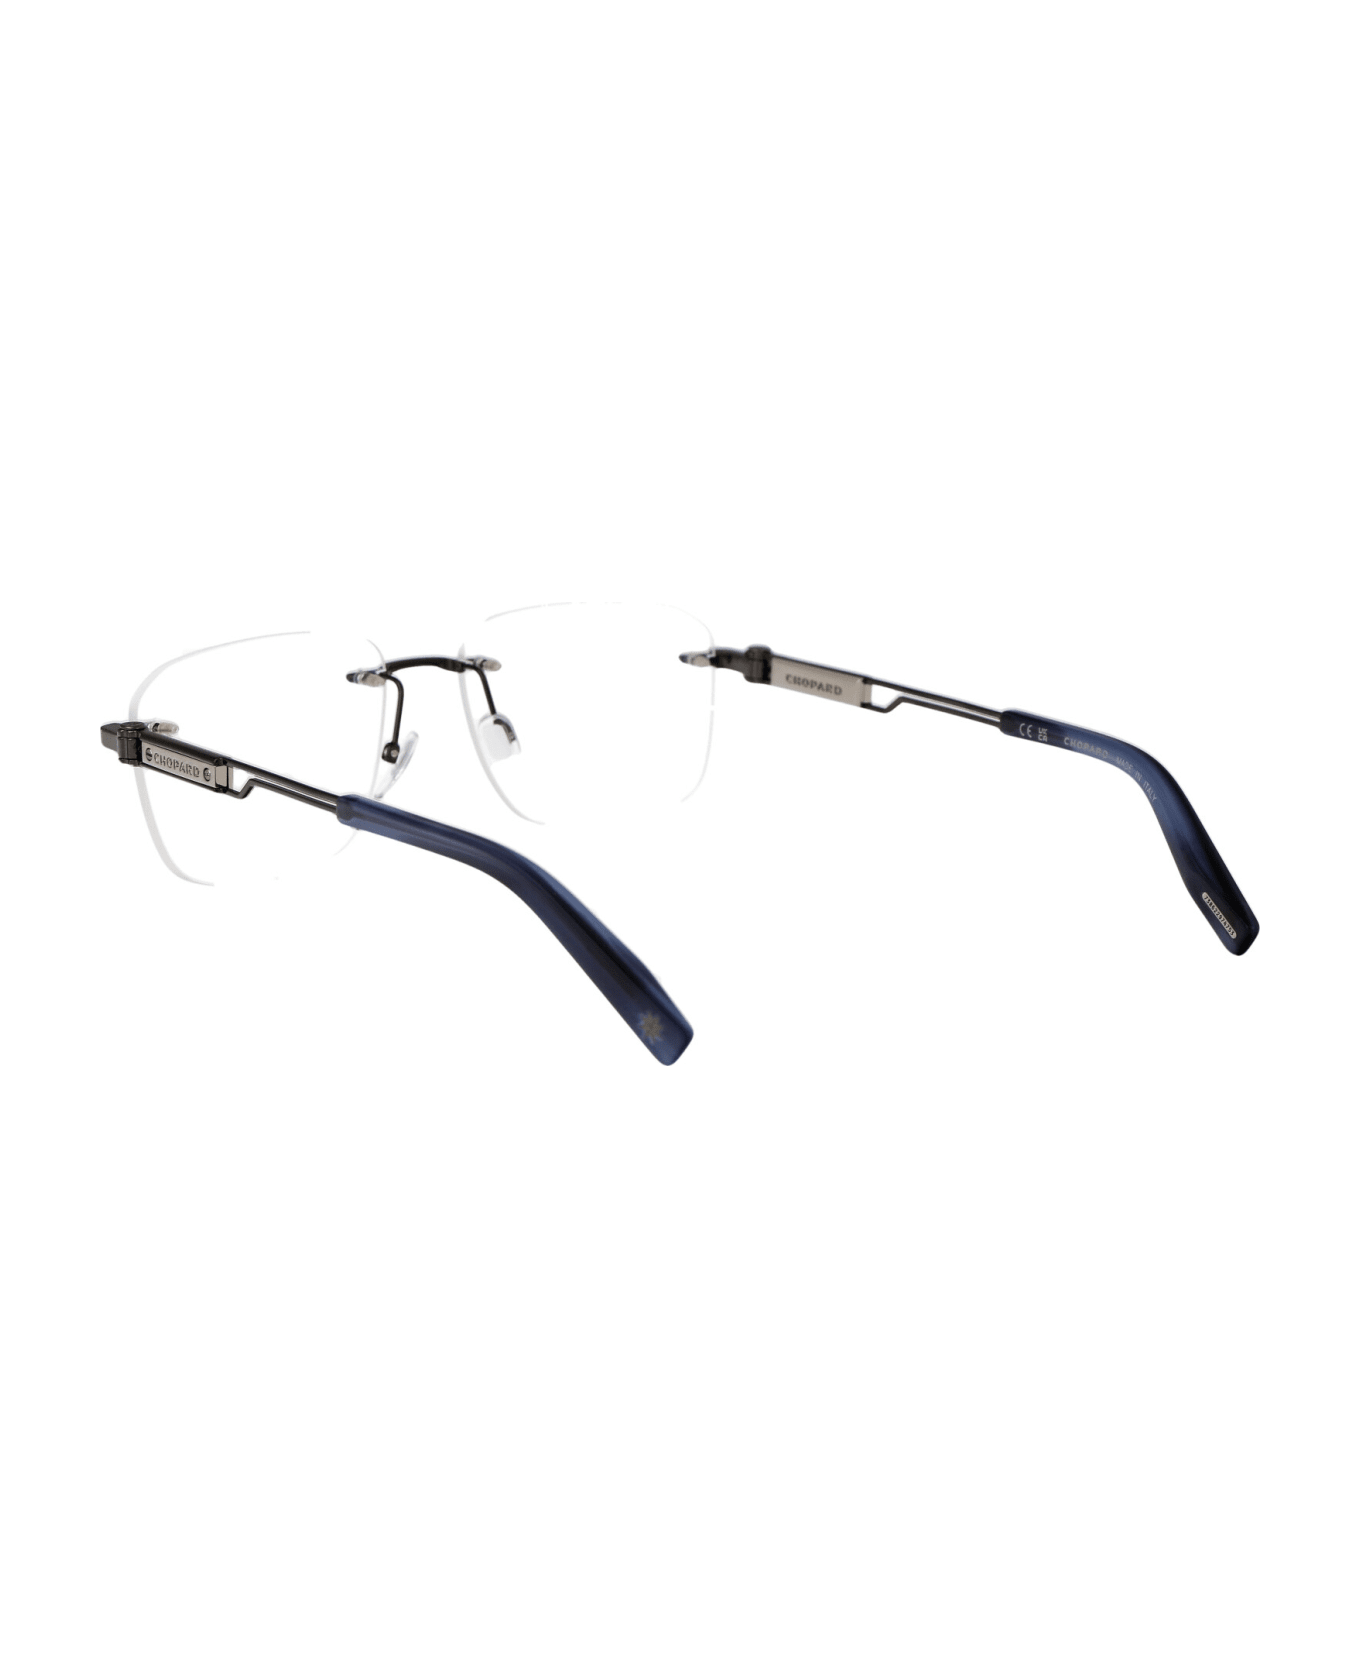 Chopard Vchg86 Glasses - 0568 BACHELITE LUCIDA TOTALE アイウェア